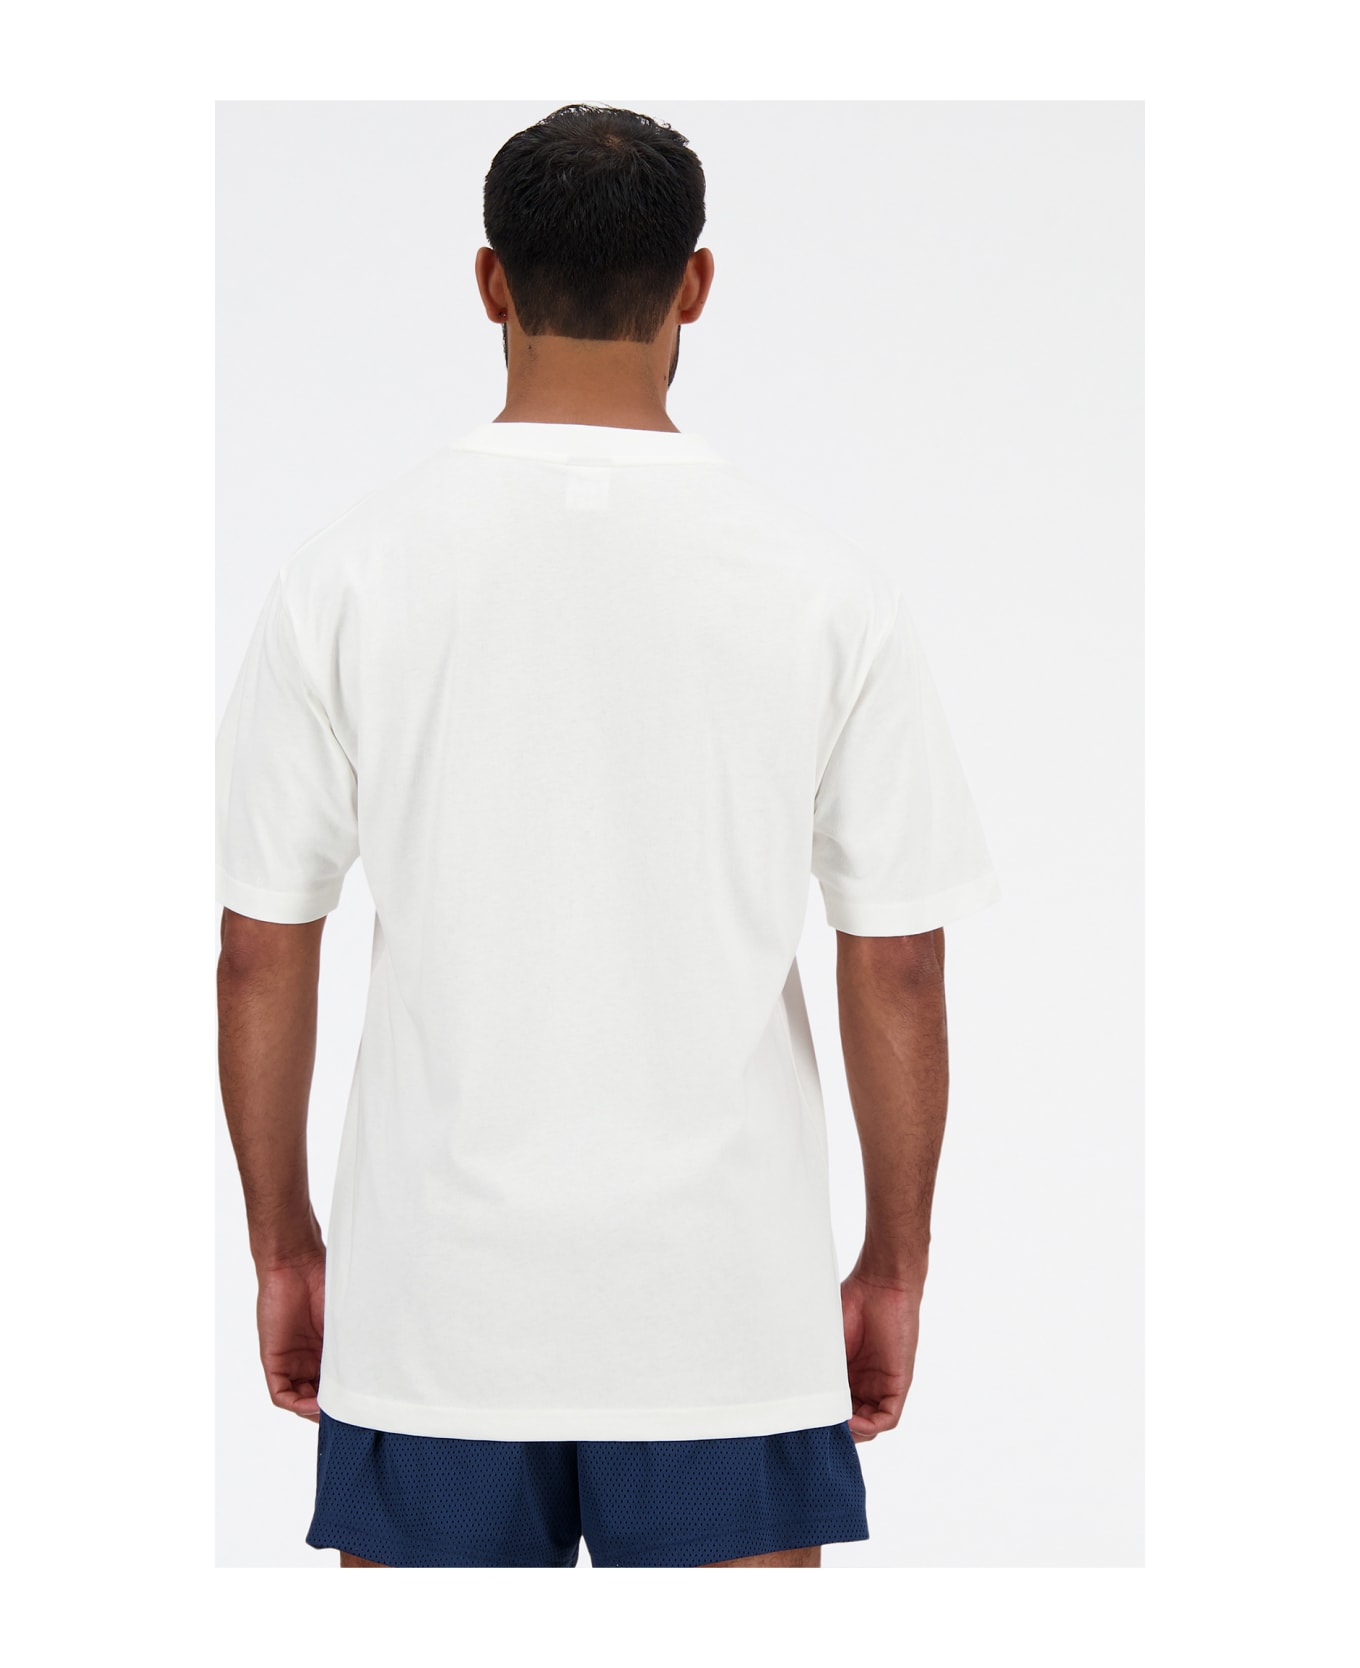 New Balance White T-shirt With Print - BIANCA